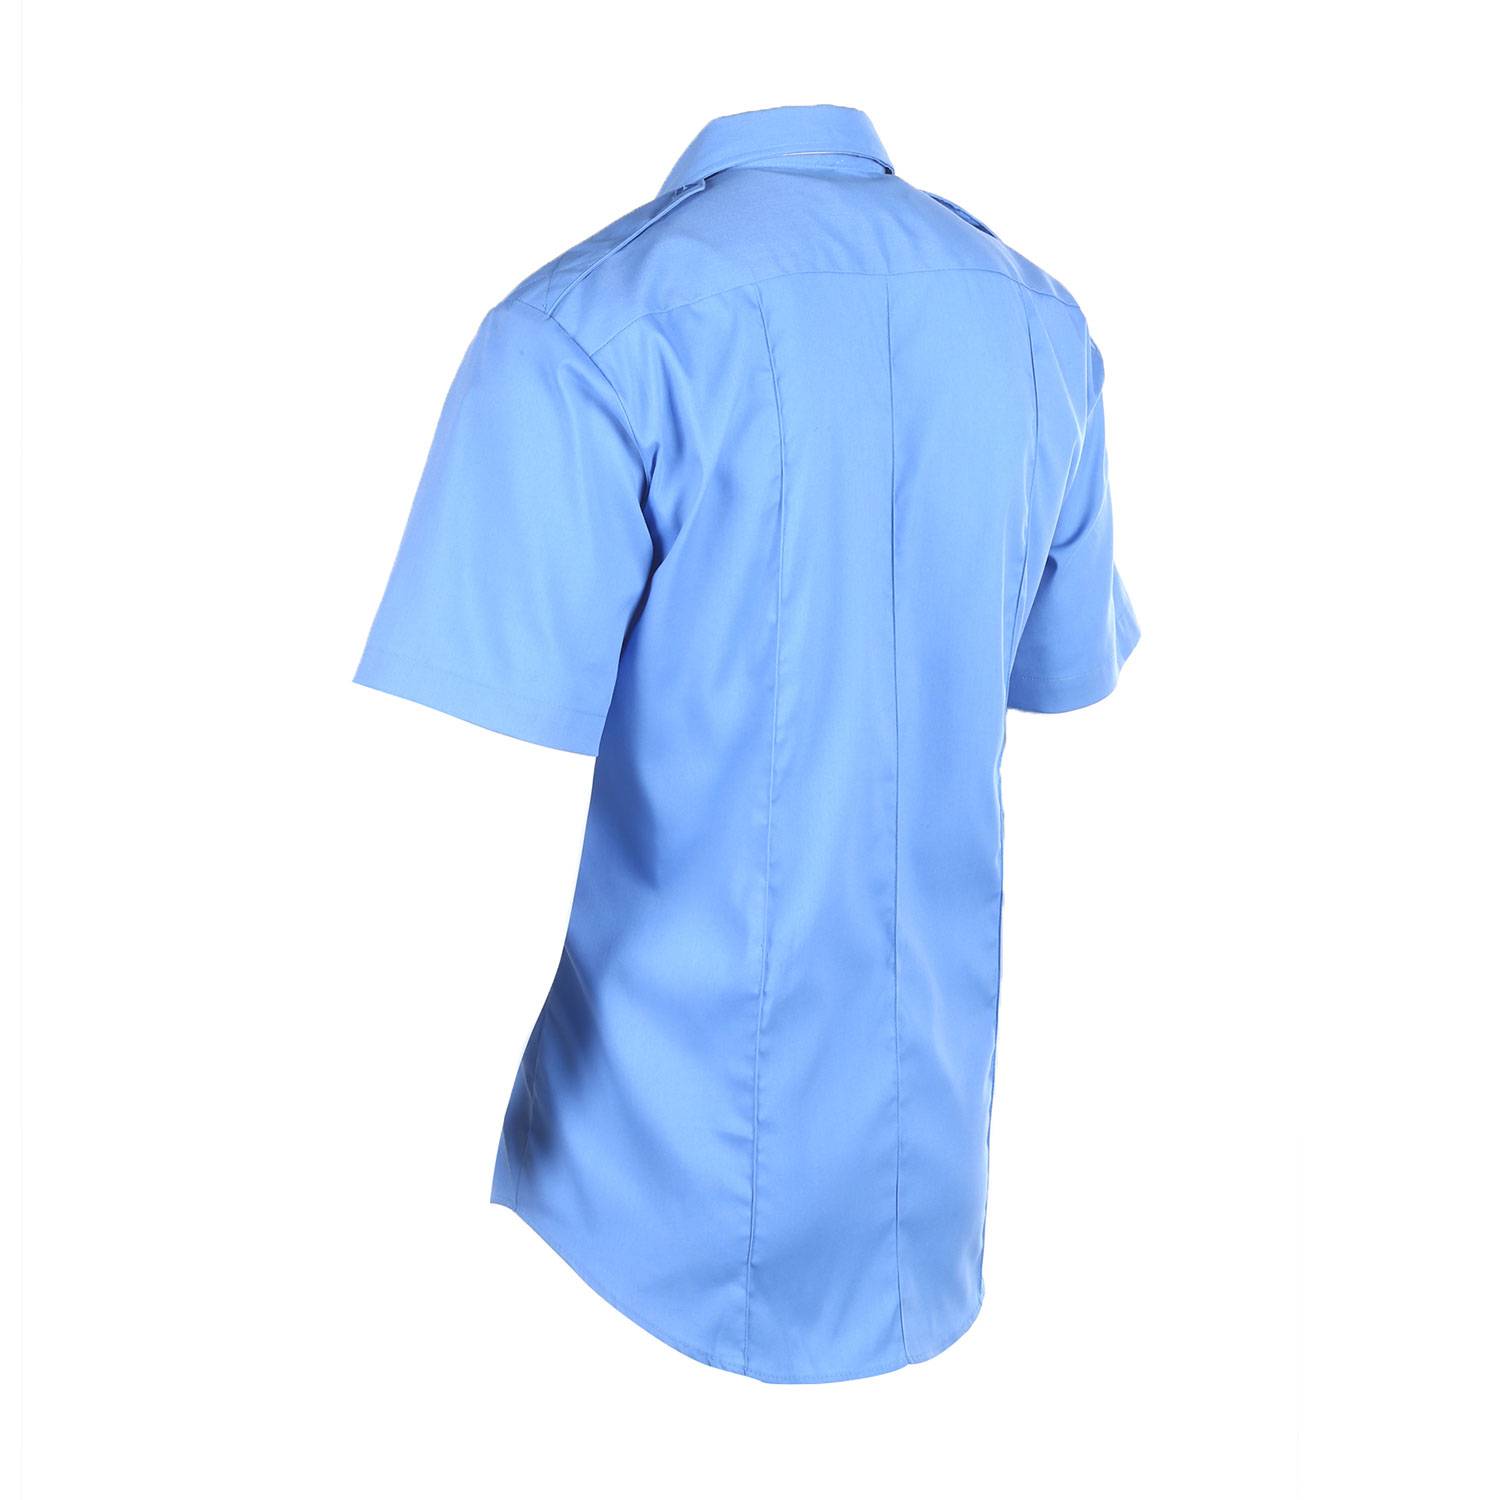 Spiewak SPDU Short Sleeve Poly Cotton Duty Shirt